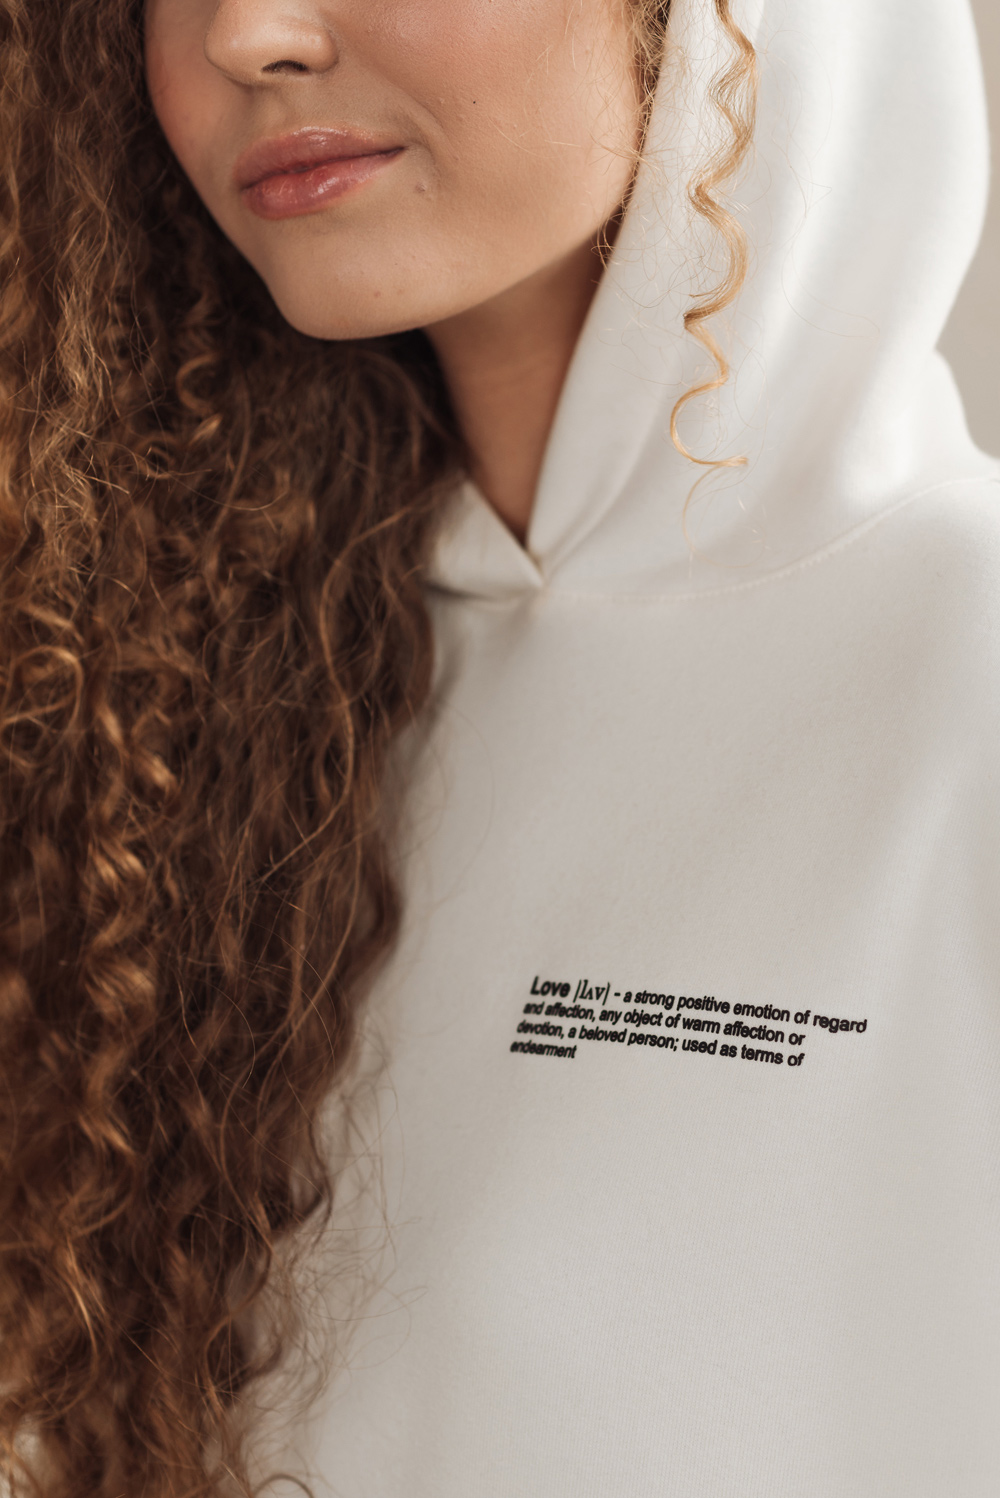 White sweatshirt with a slogan